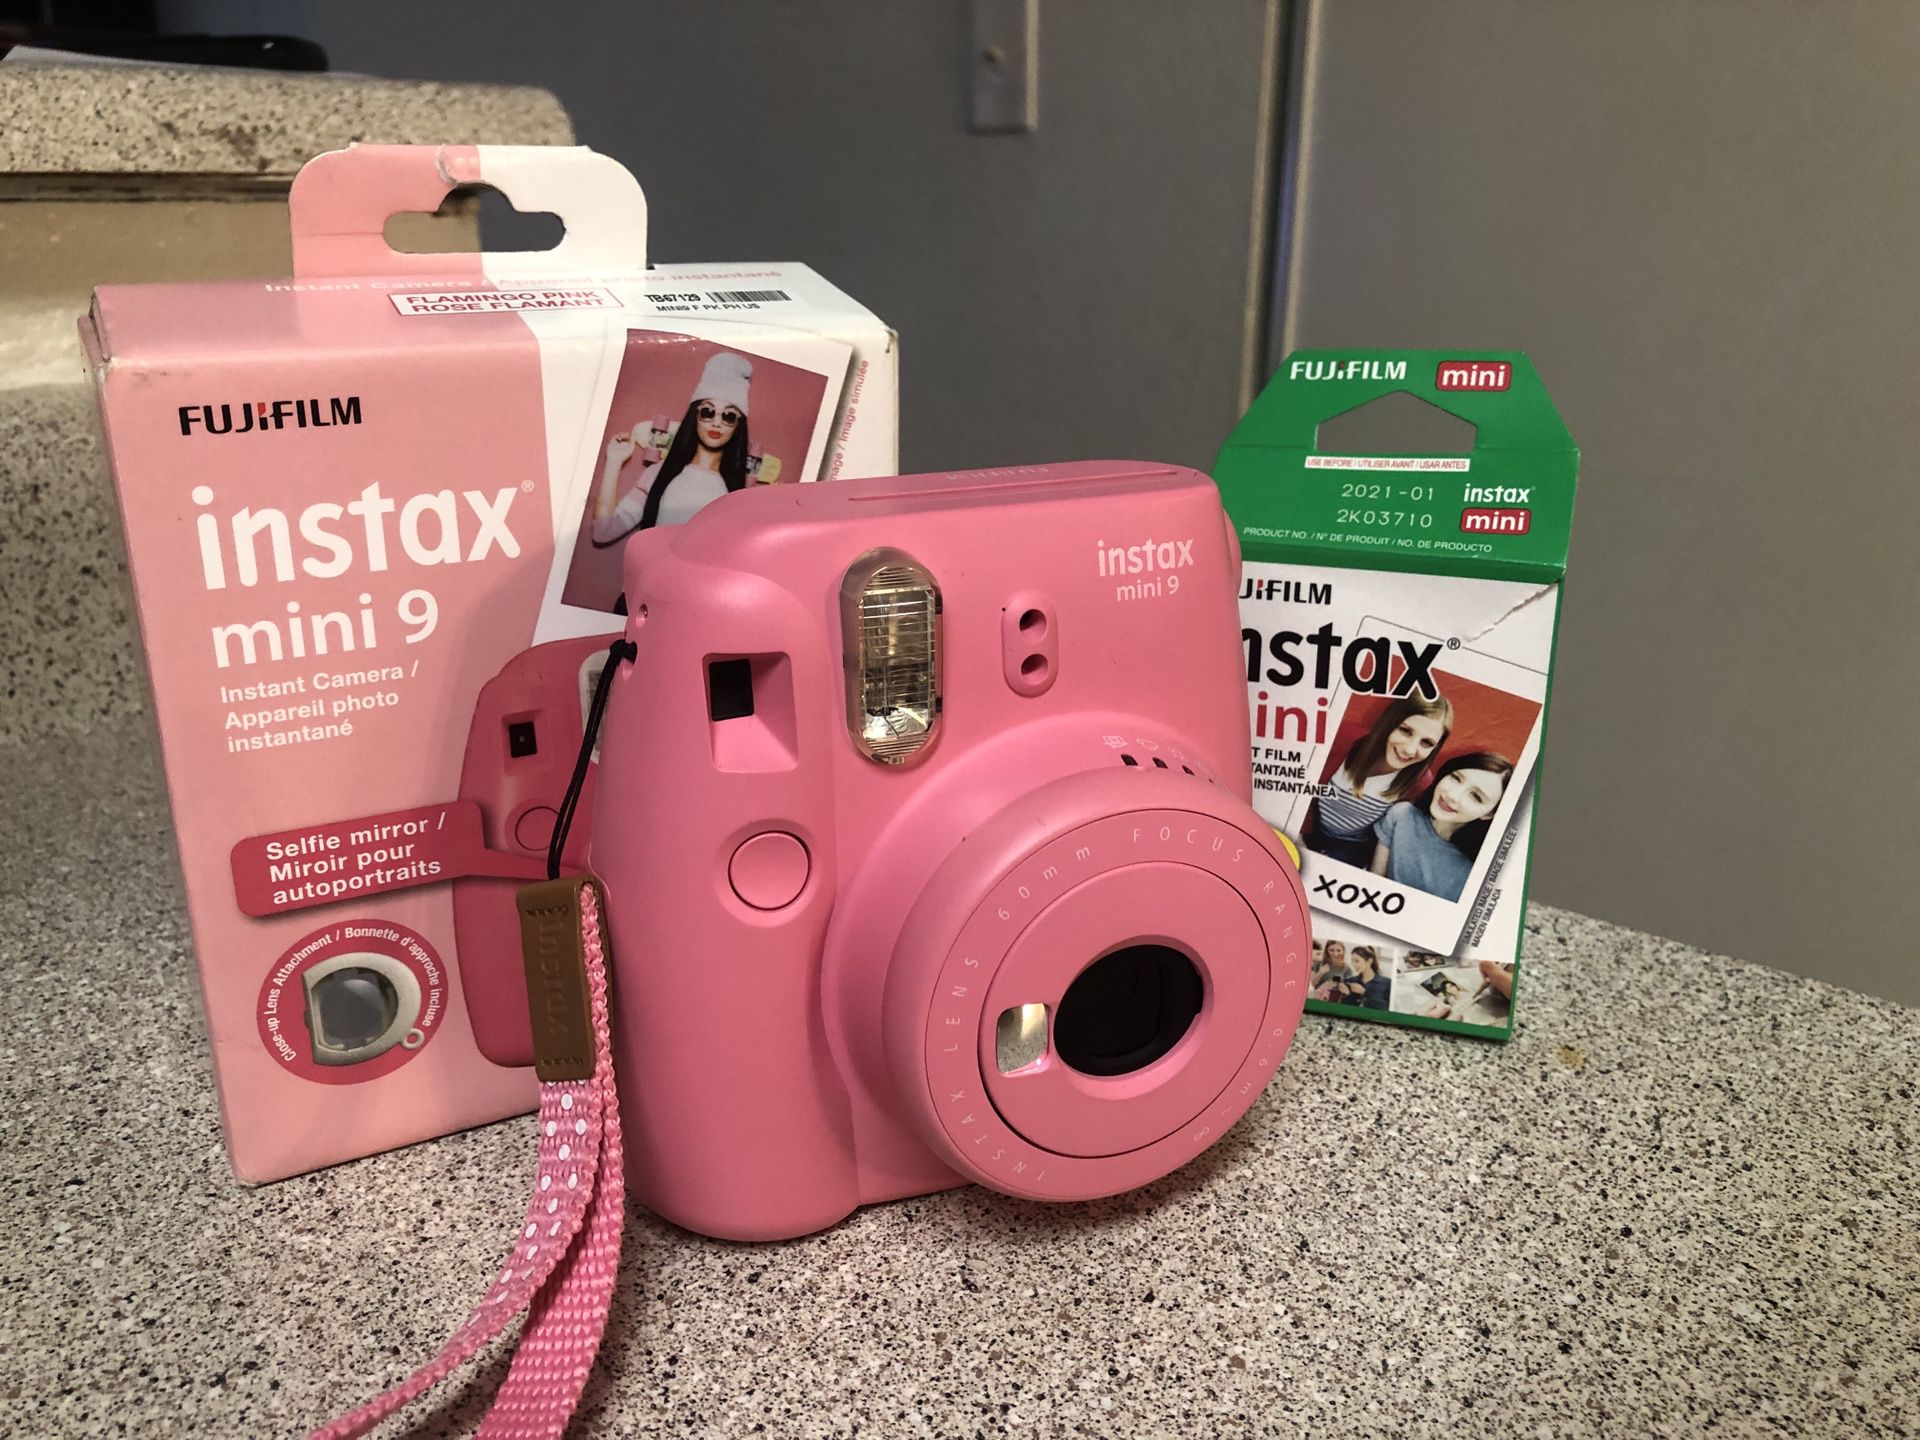 Fujifilm Mini Instax 9 camera with film